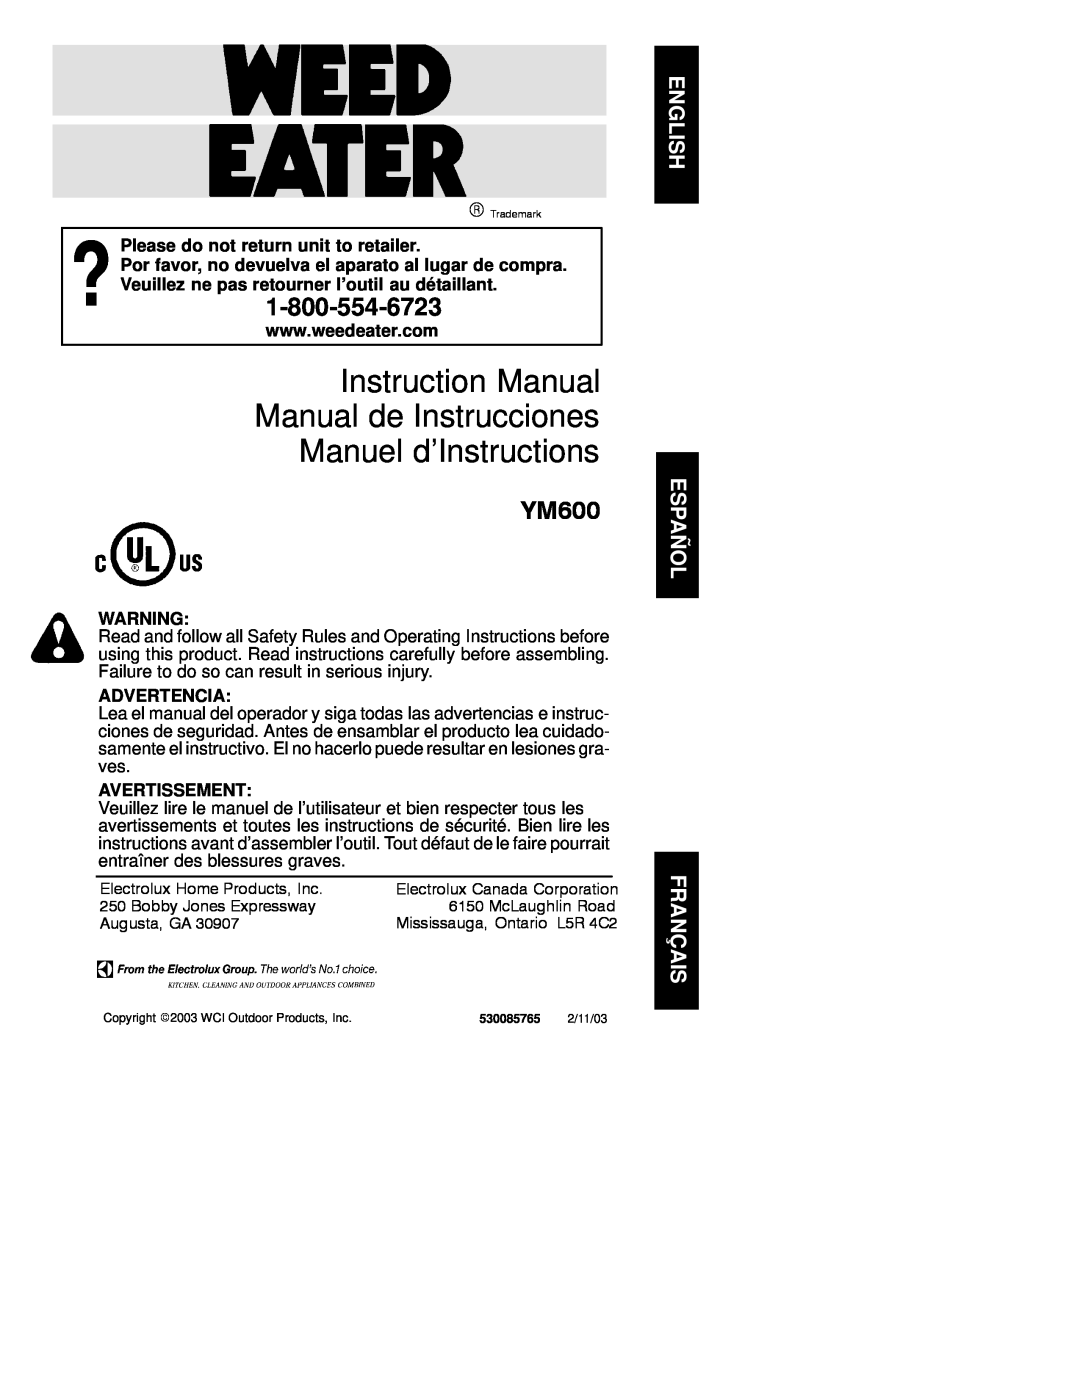 Poulan YM600 instruction manual Please do not return unit to retailer, Advertencia, Avertissement, Manuel d’Instructions 